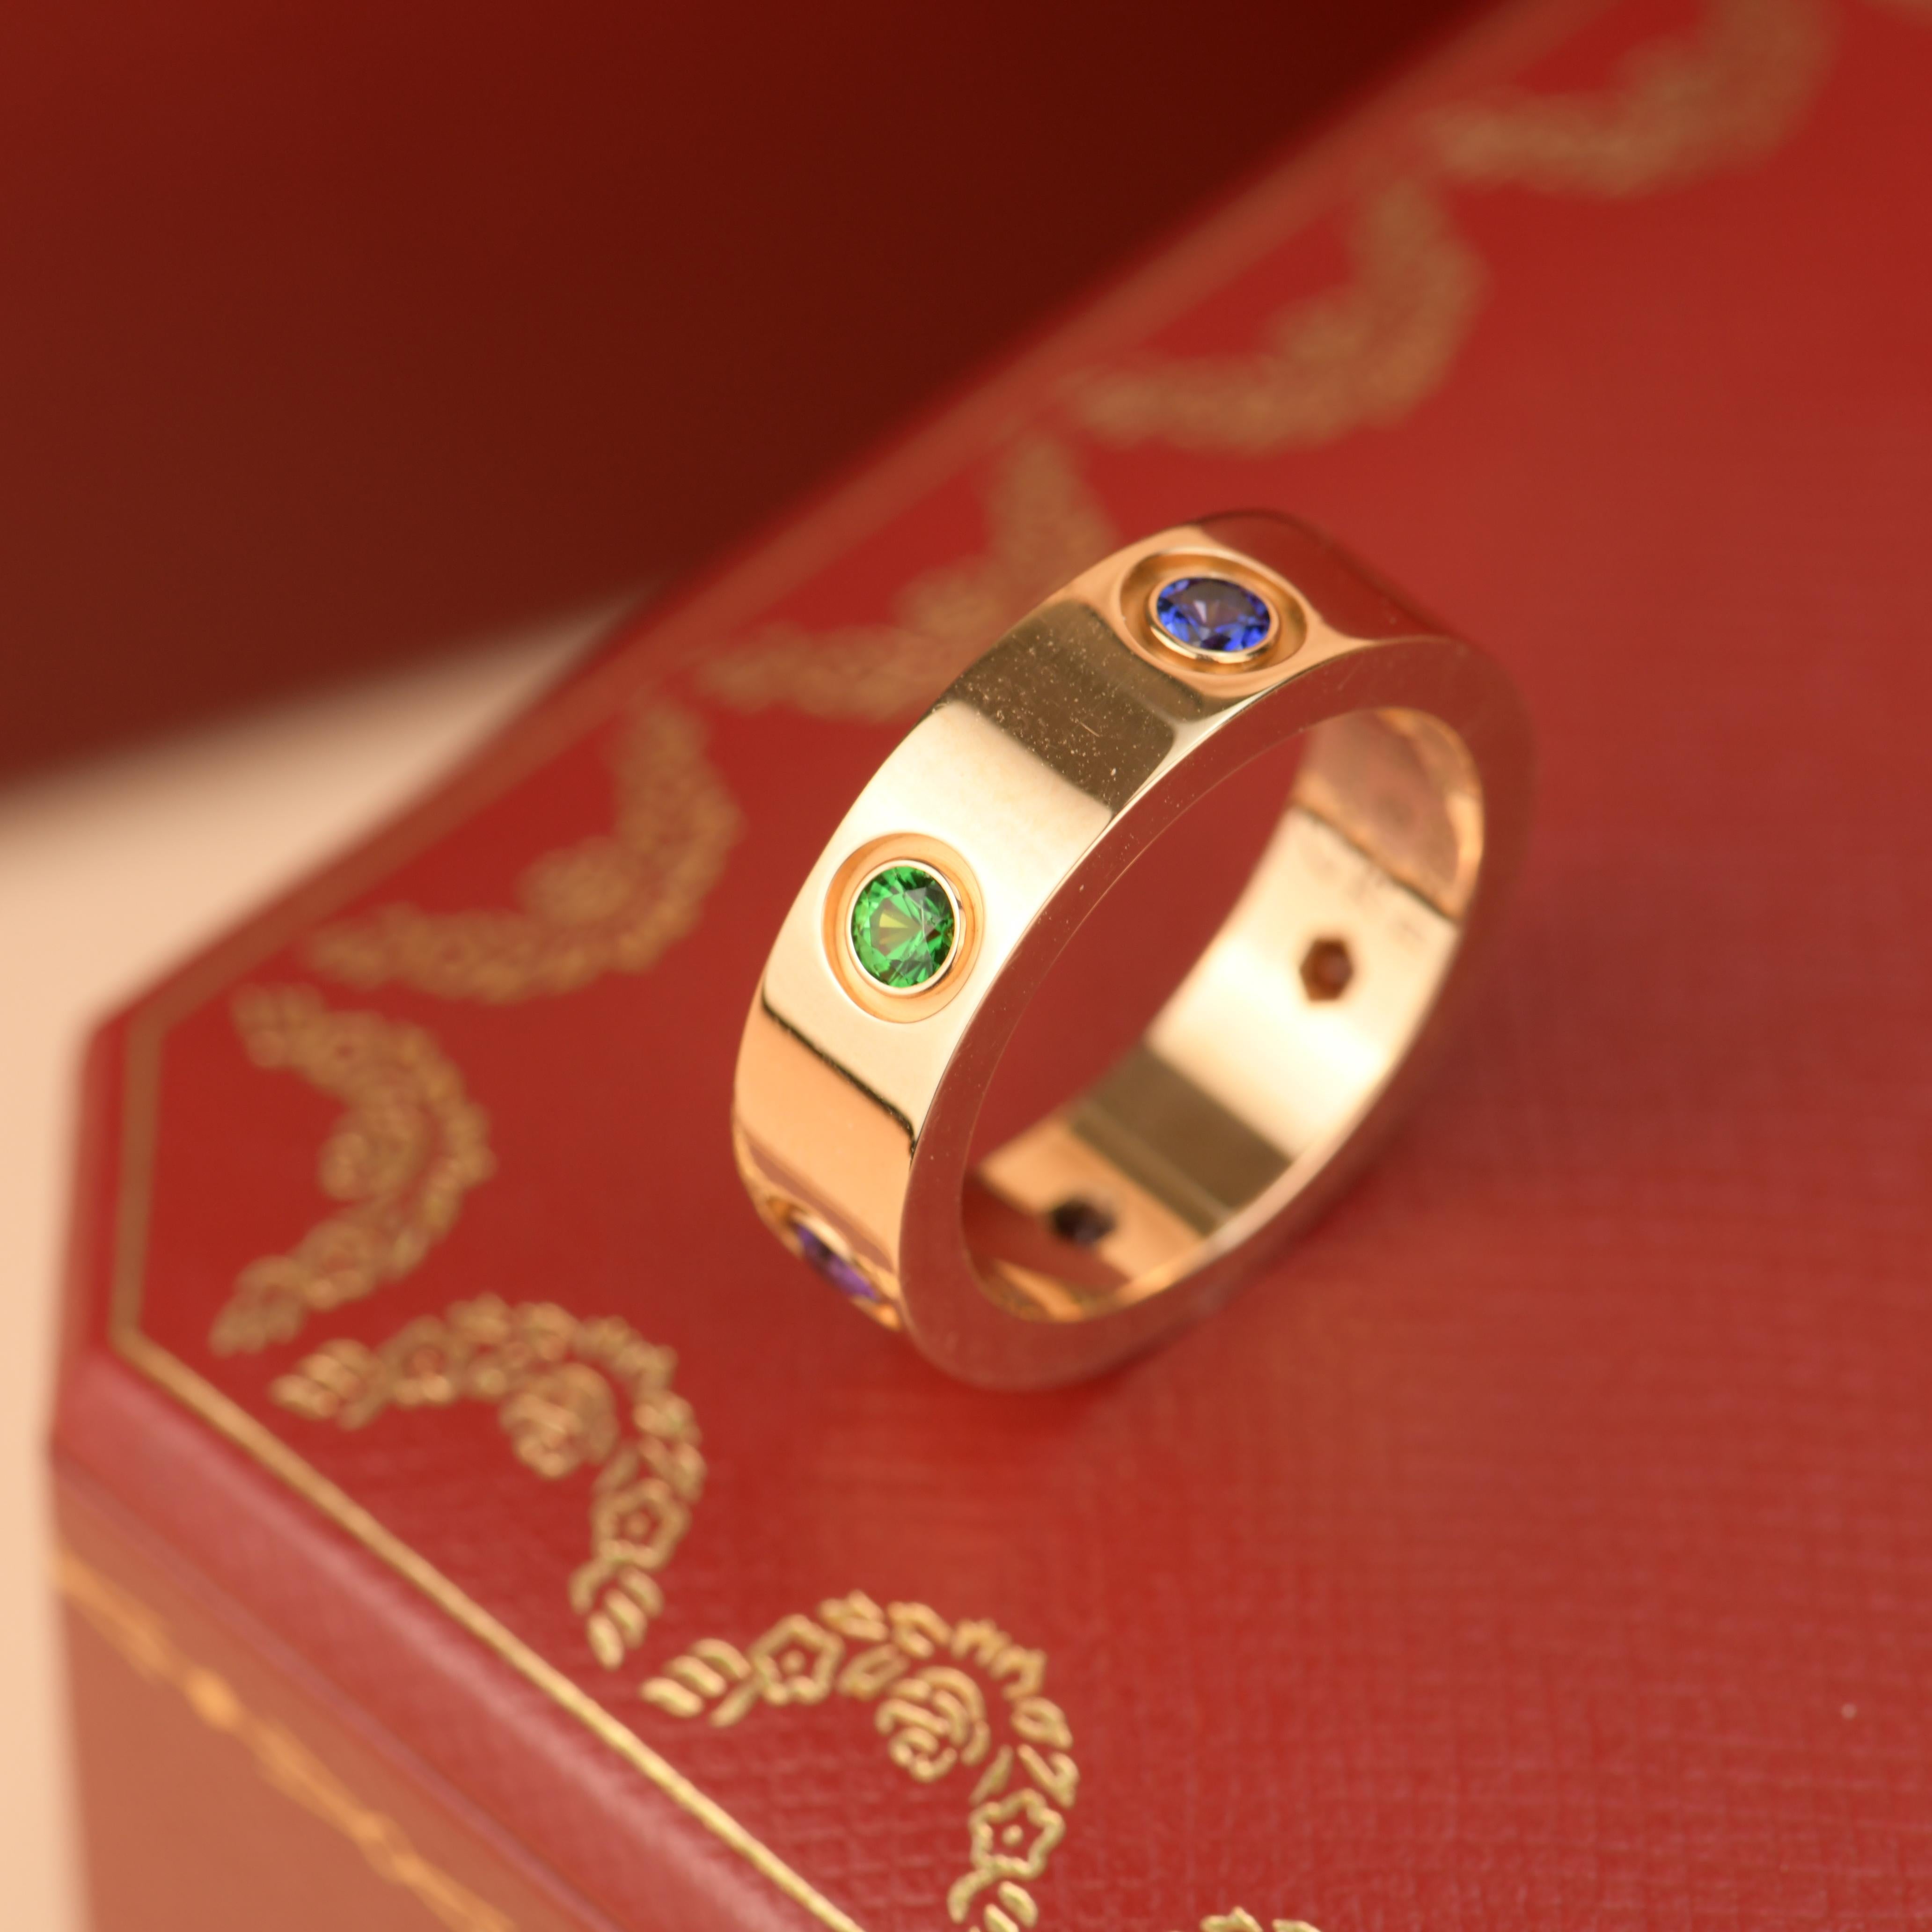 LOVE ring, 18K rose gold, set with 1 pink sapphire, 1 blue sapphire, 1 yellow sapphire, 1 green garnet, 1 orange garnet, and 1 amethyst. 

Dandelion Antiques Code	AT-1031
Brand	                                Cartier
Model	                          